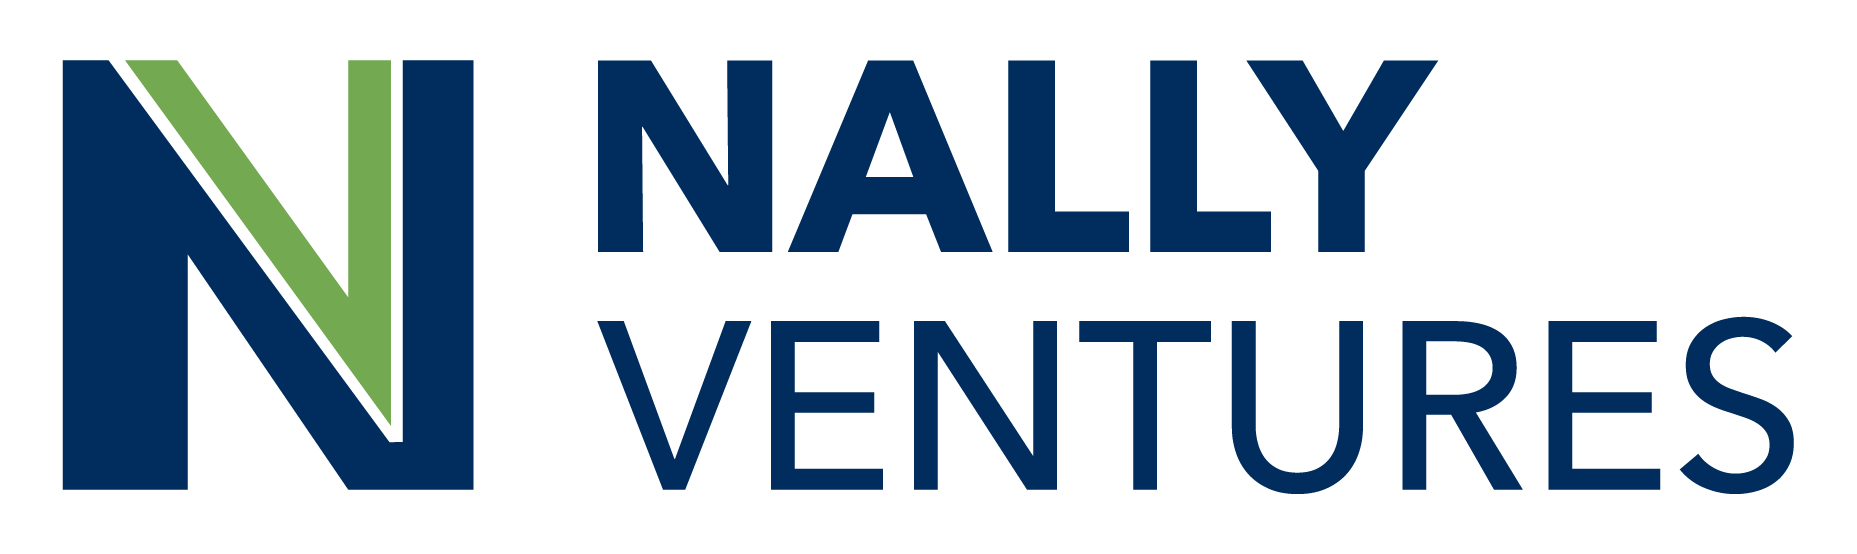 Nally Ventures GFAC sponsor